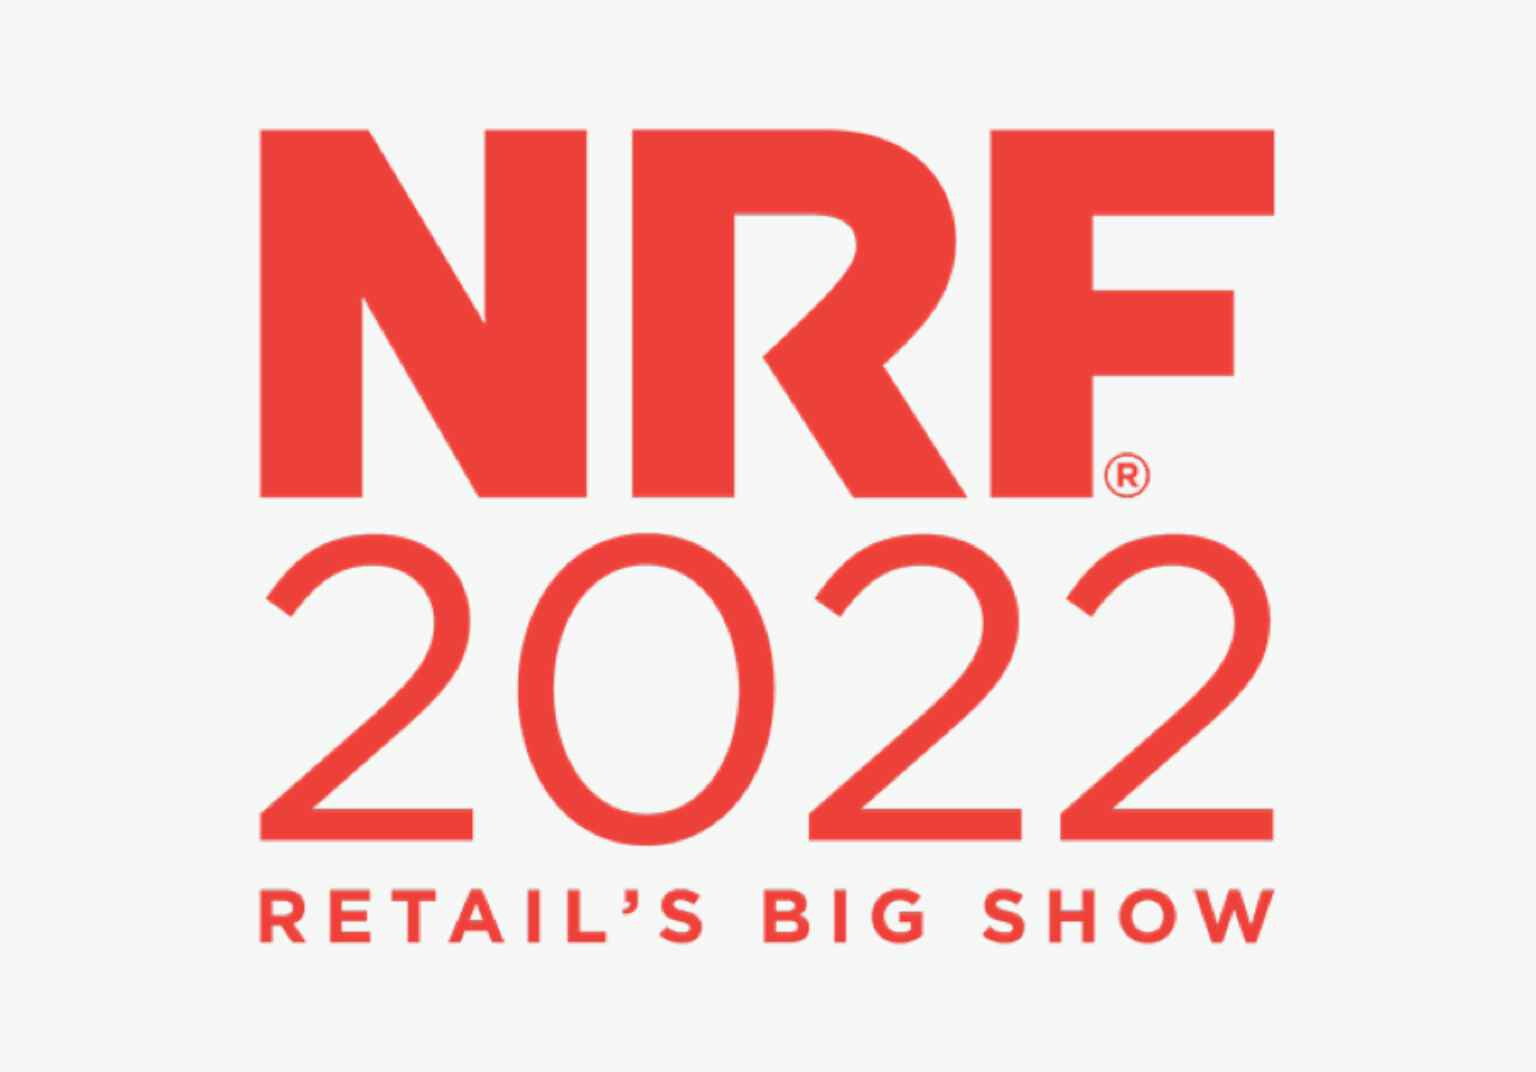 NRF 2022